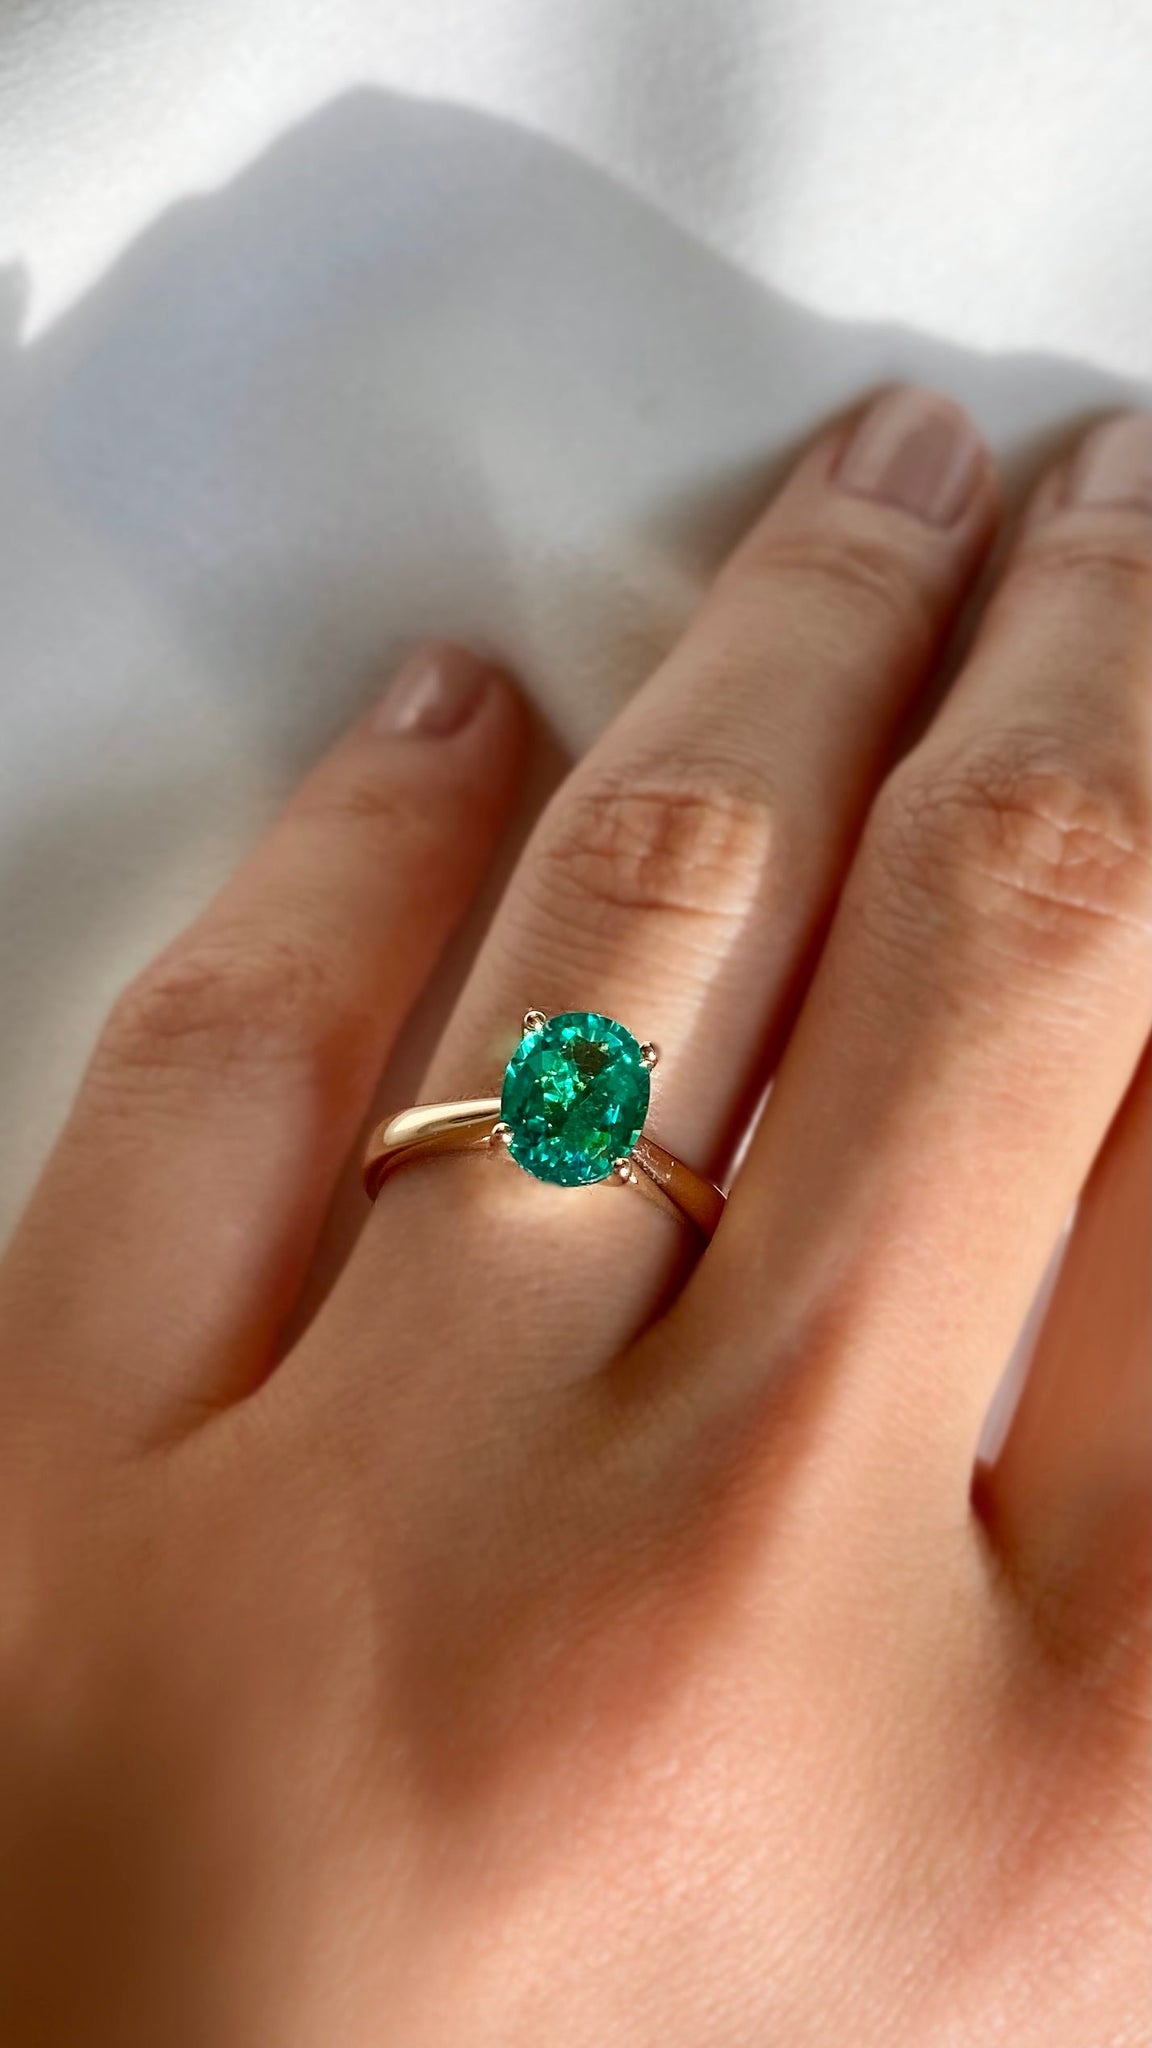 Dakota Ring 18K Yellow Gold Emerald